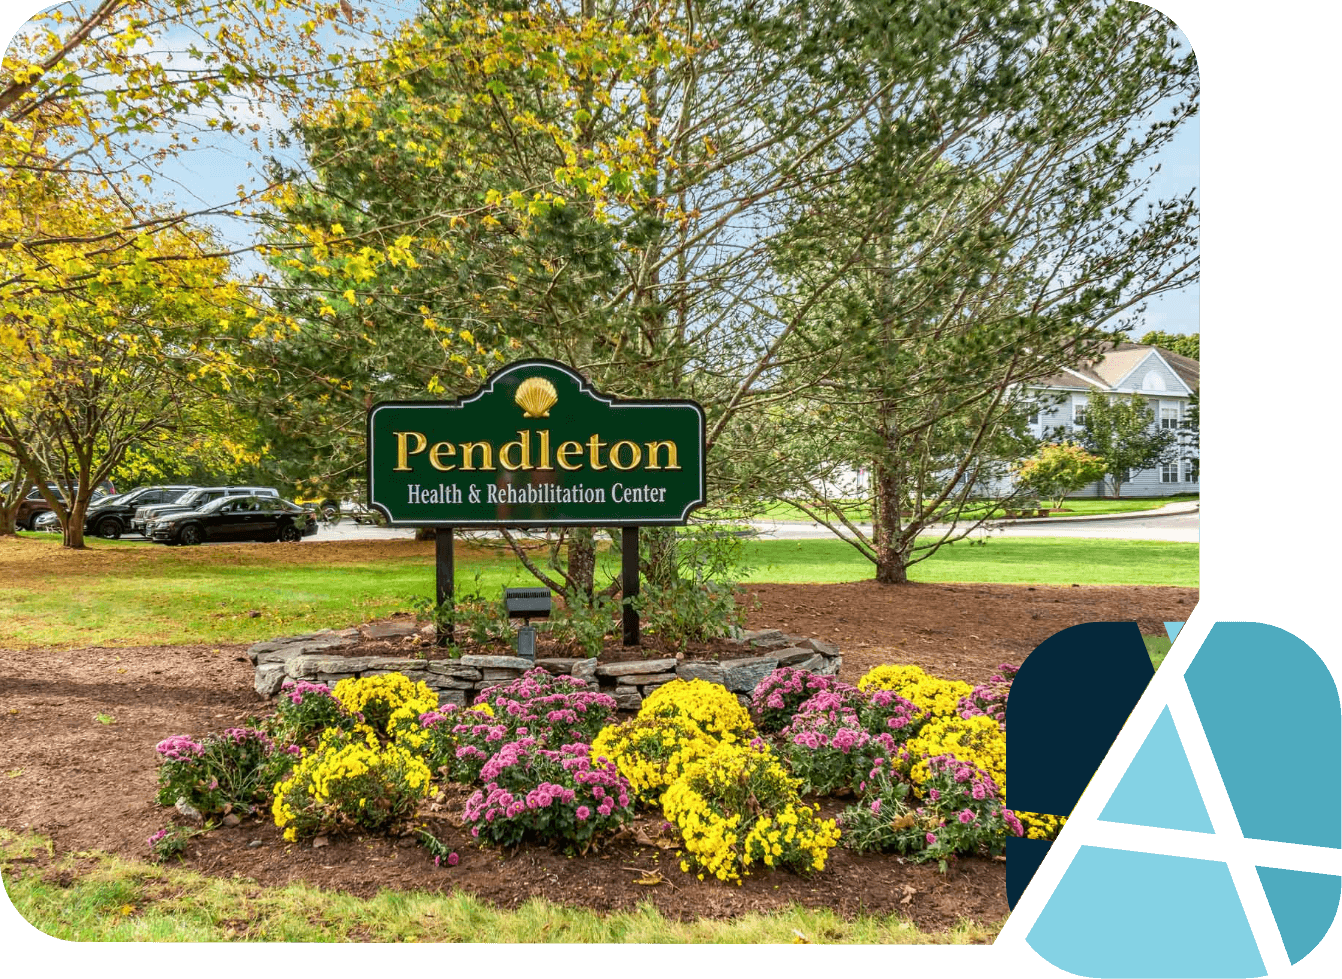 About Pendleton